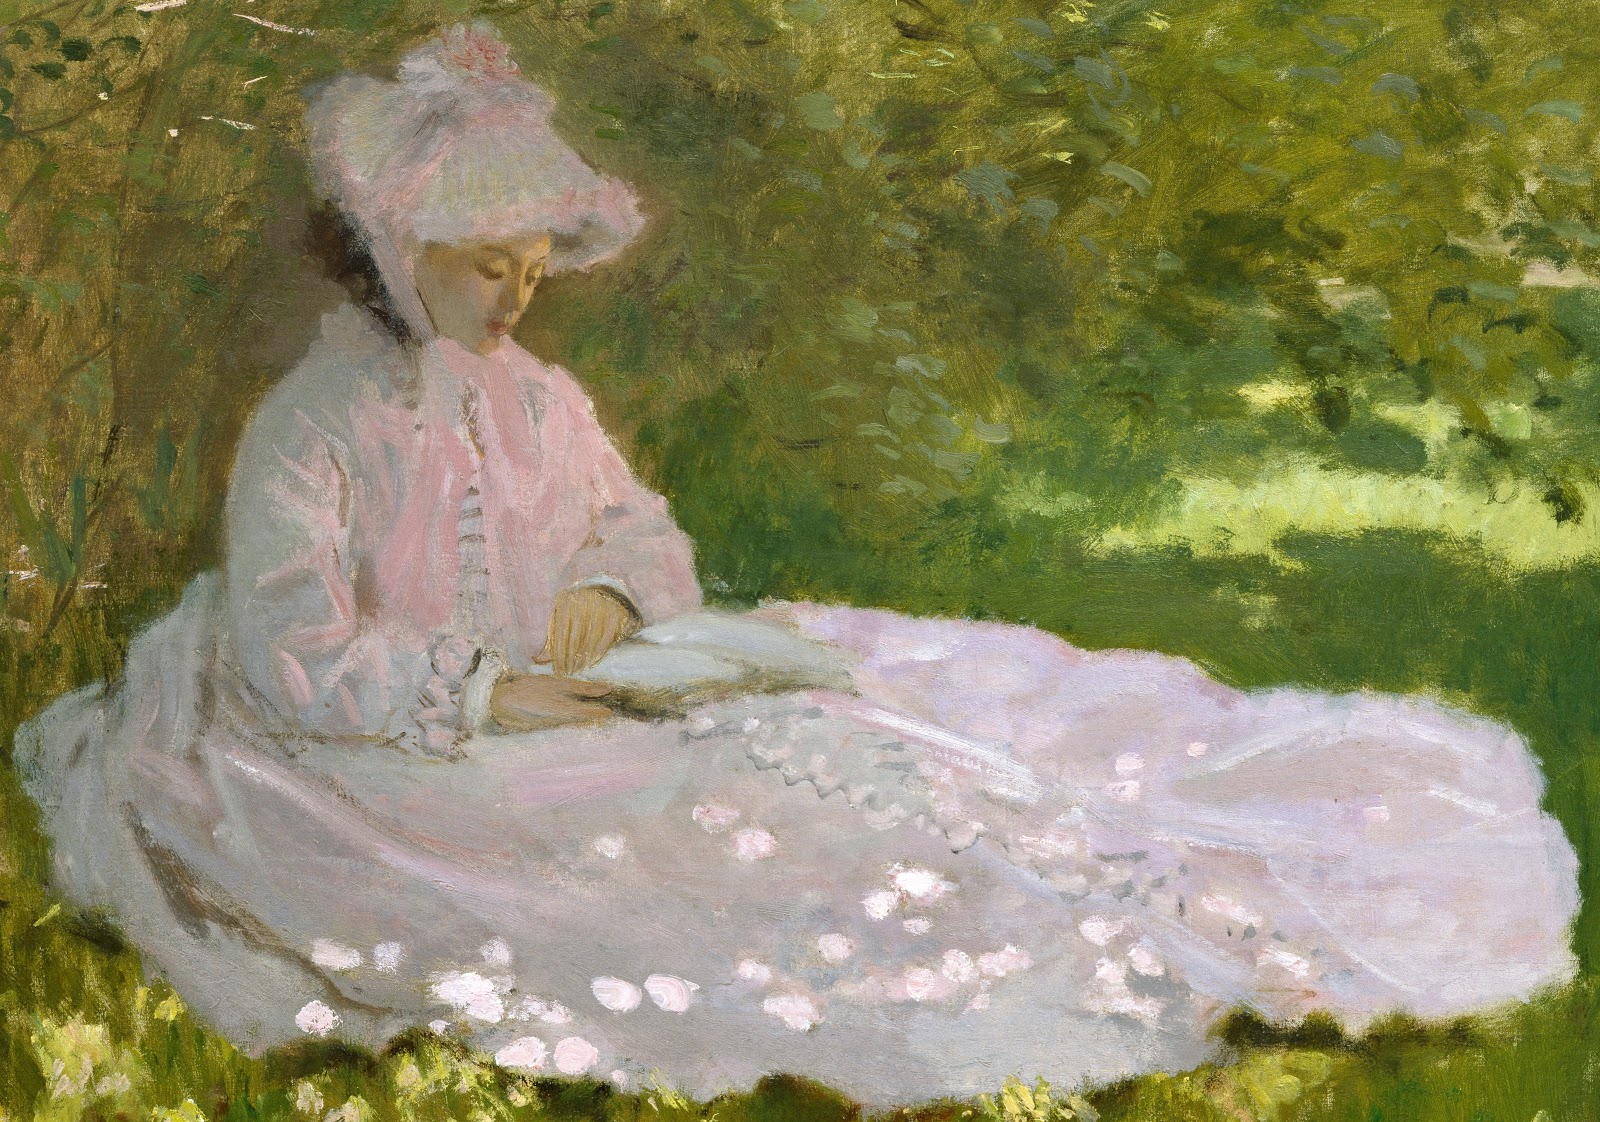 Claude+Monet-1840-1926 (703).jpg